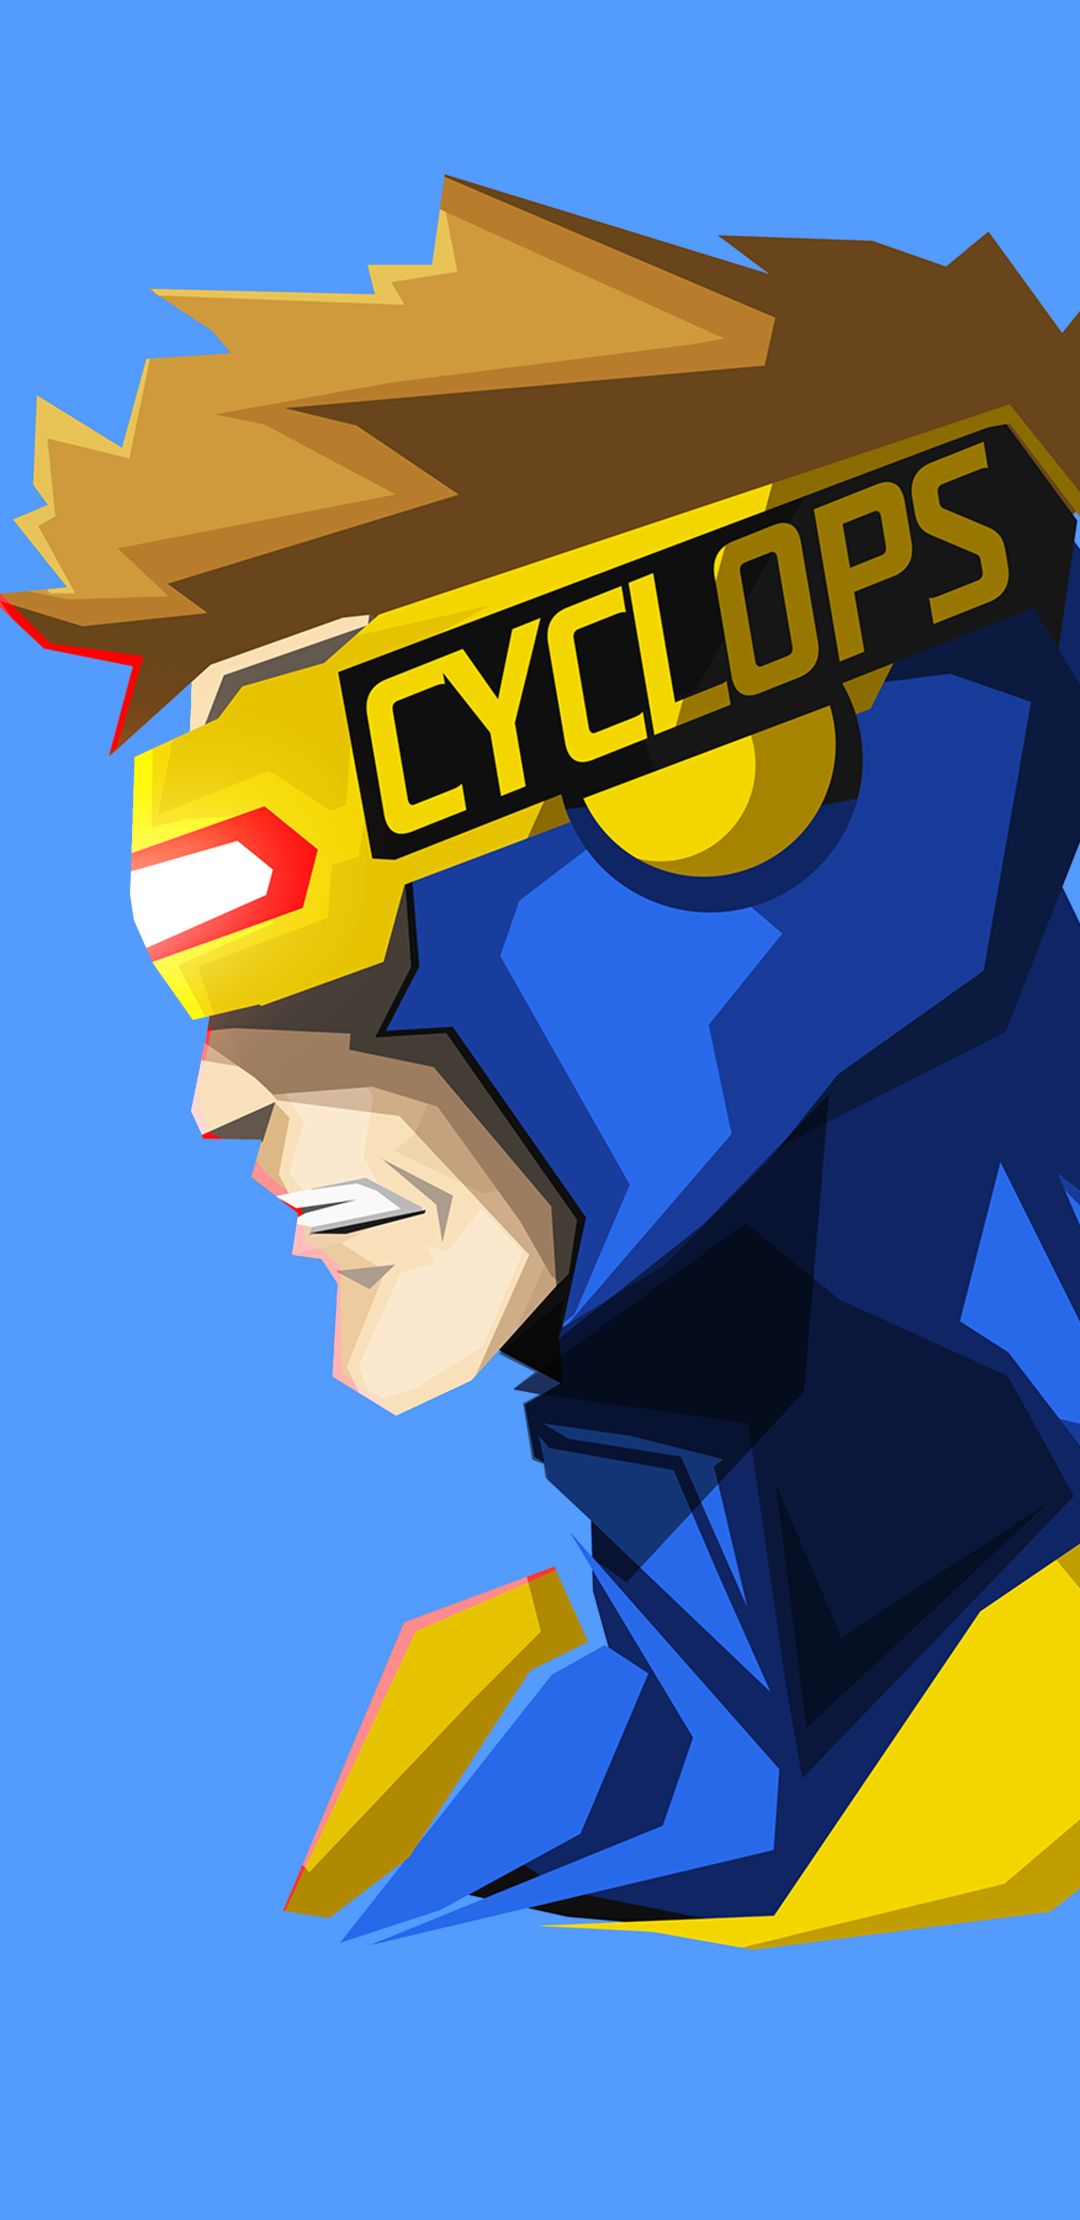 Descarga gratuita de fondo de pantalla para móvil de X Men, Historietas, Cíclope (Marvel Comics), Cíclope.